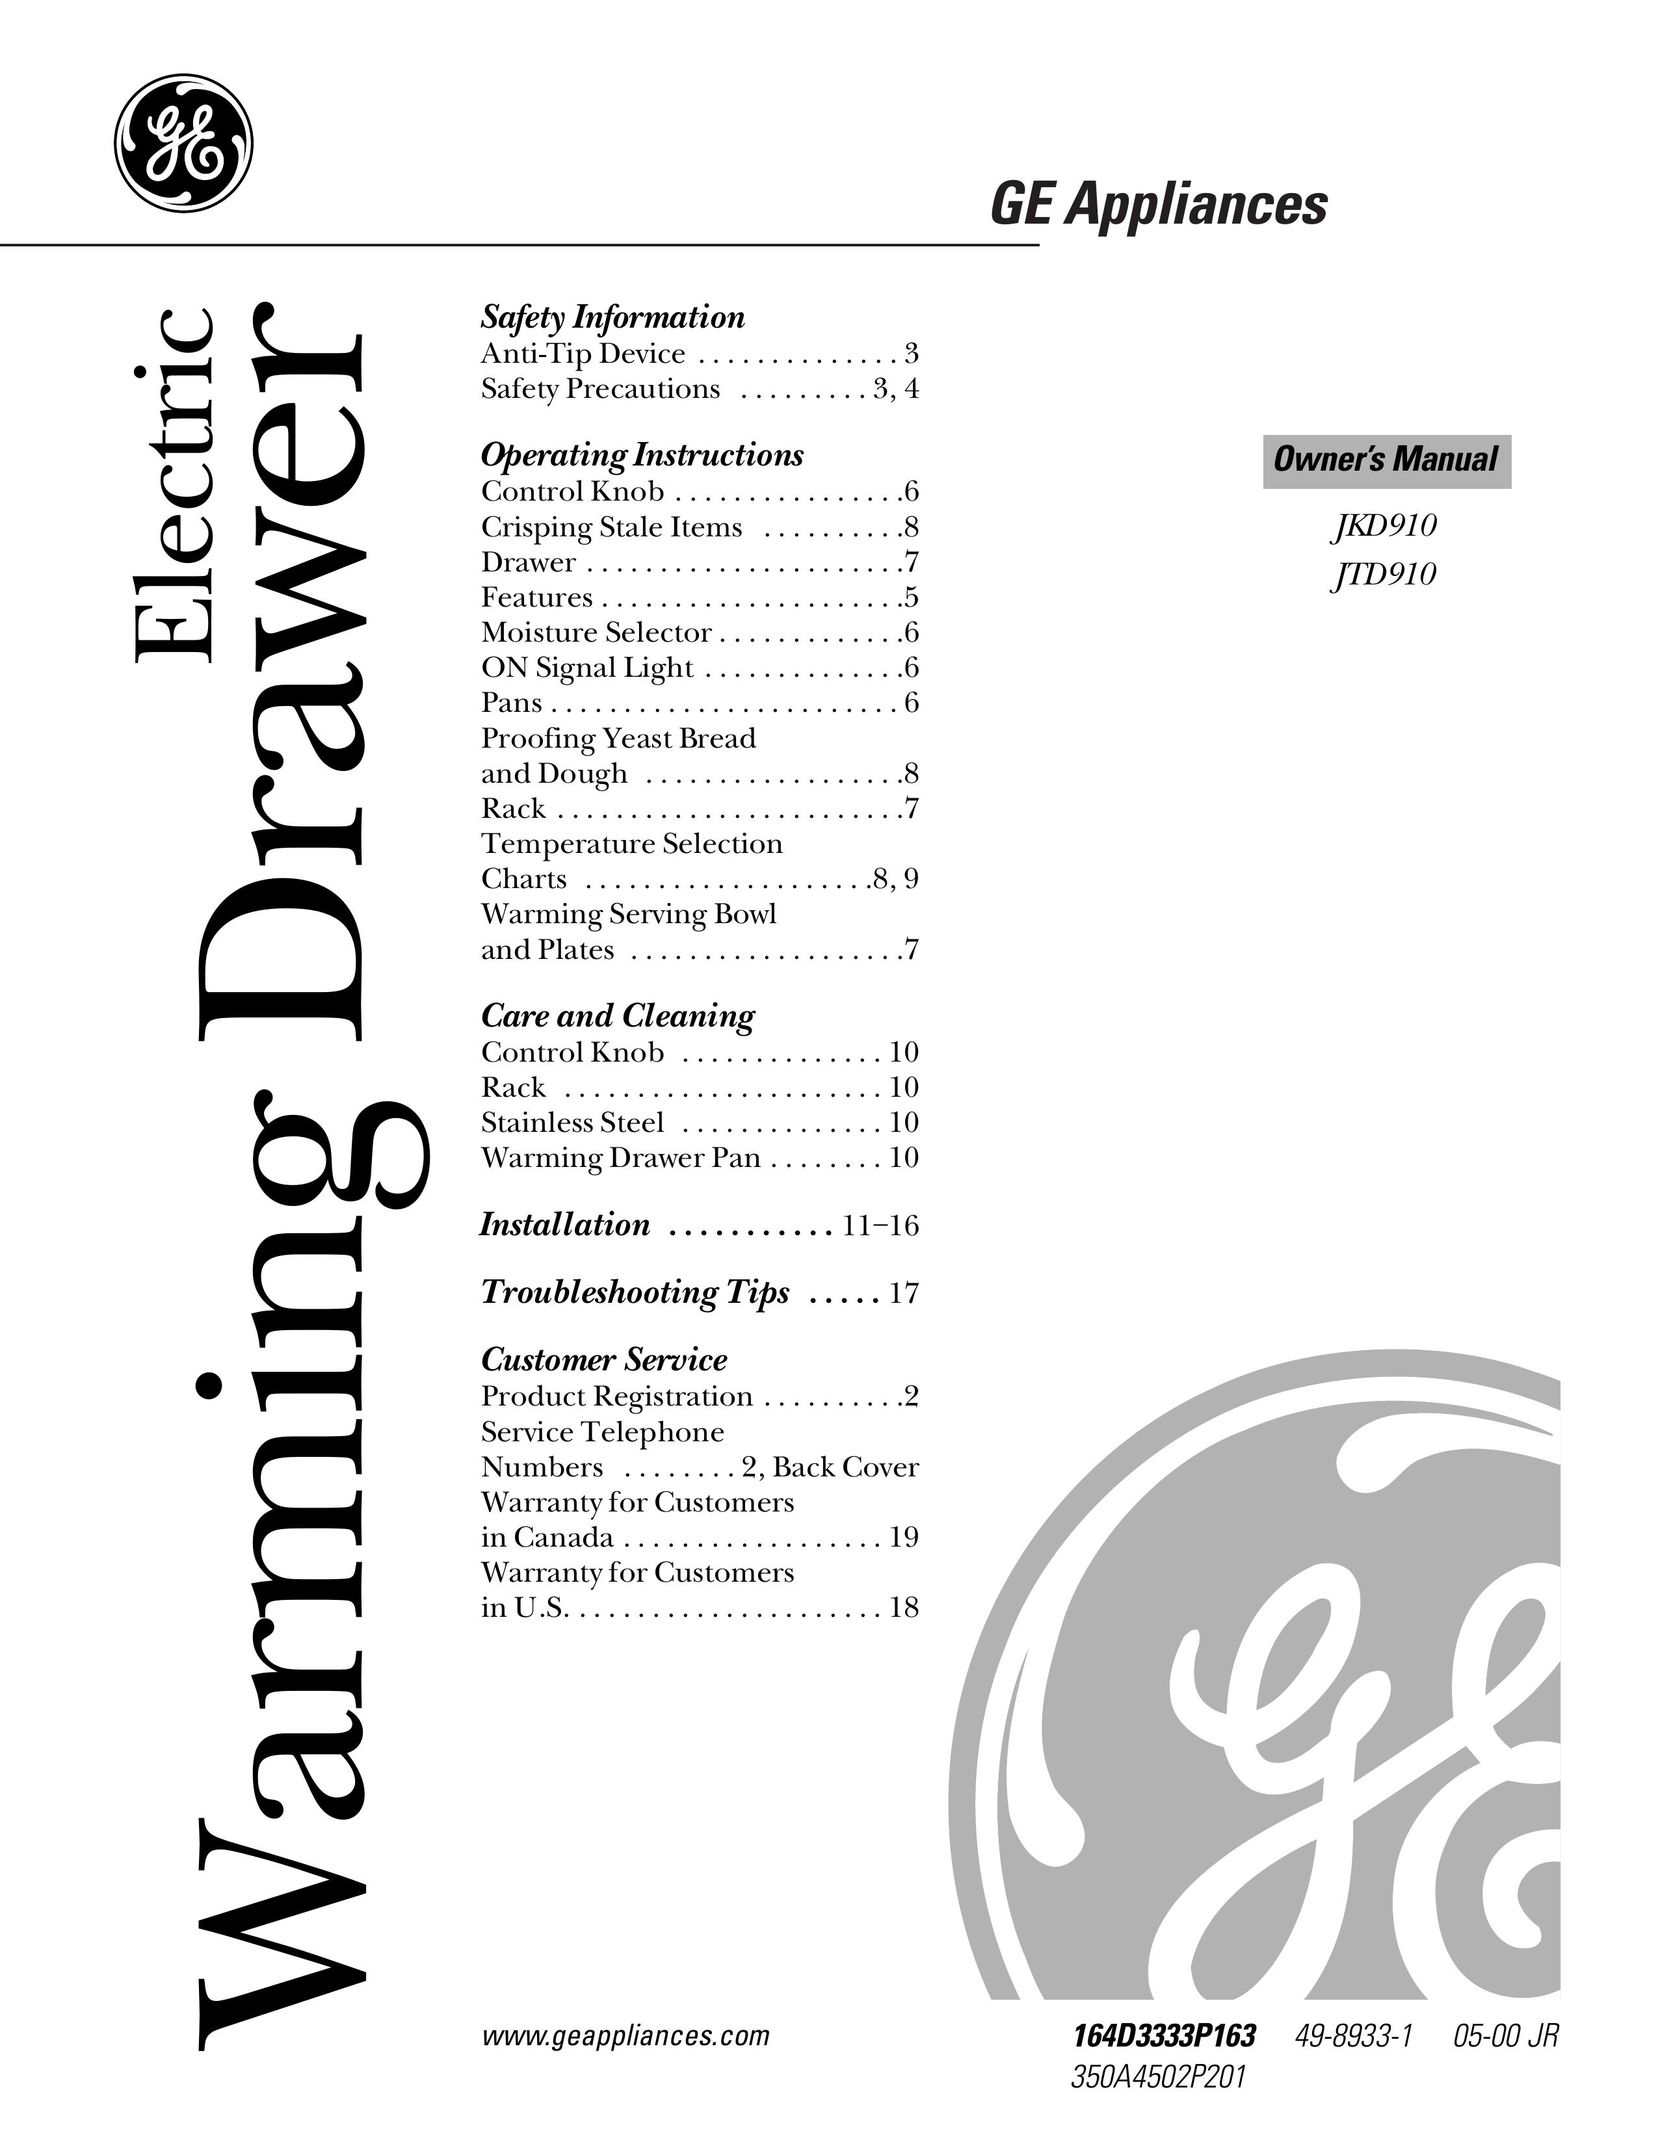 GE JTD910 Food Warmer User Manual